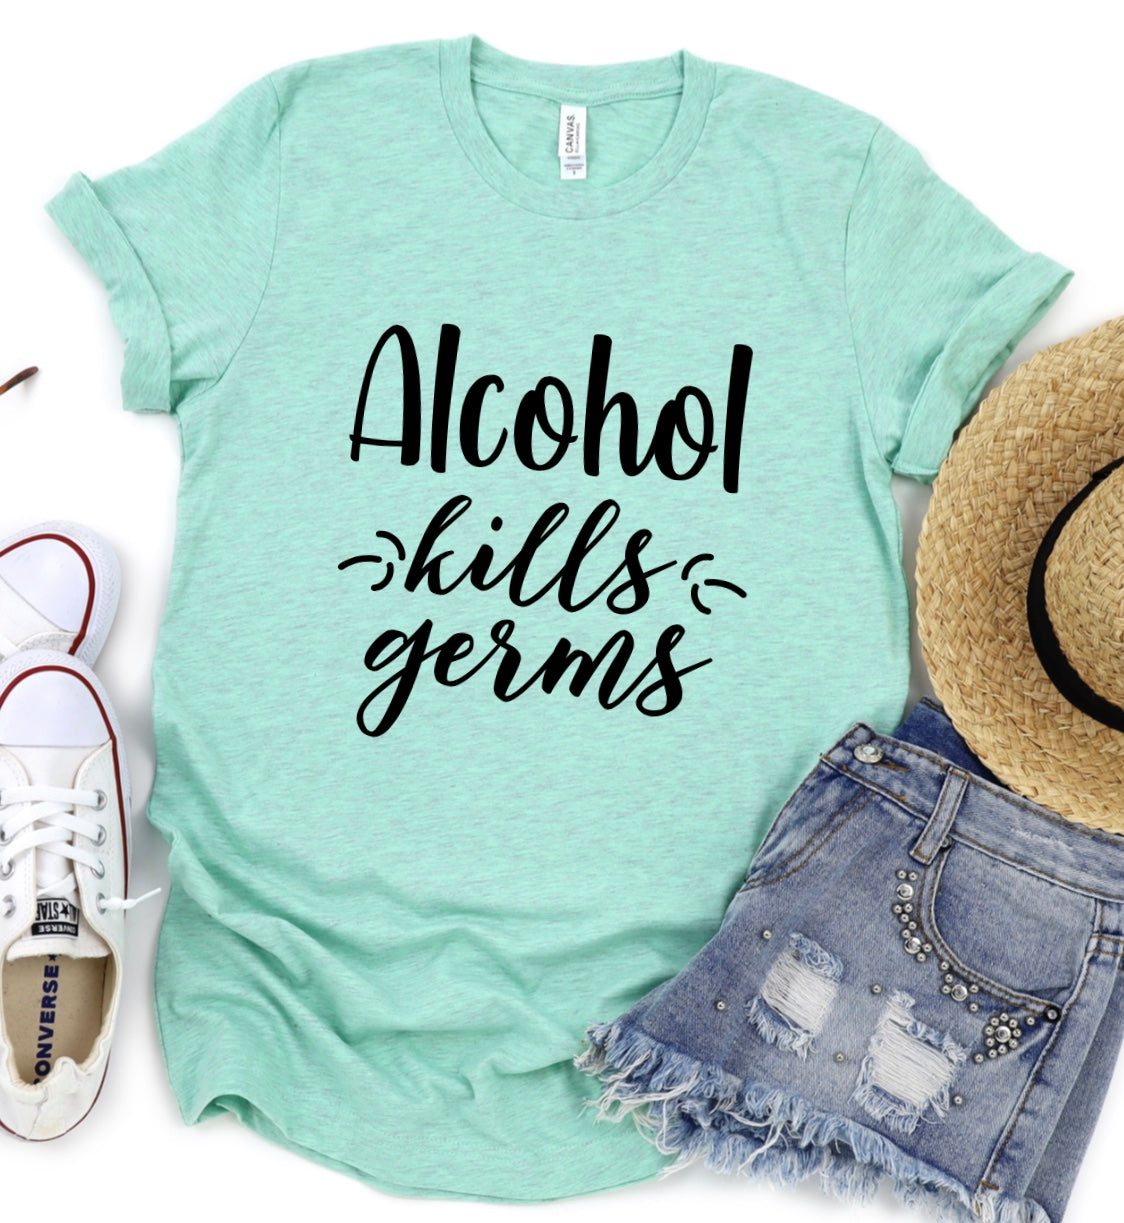 Alcohol kills germs t-shirt 